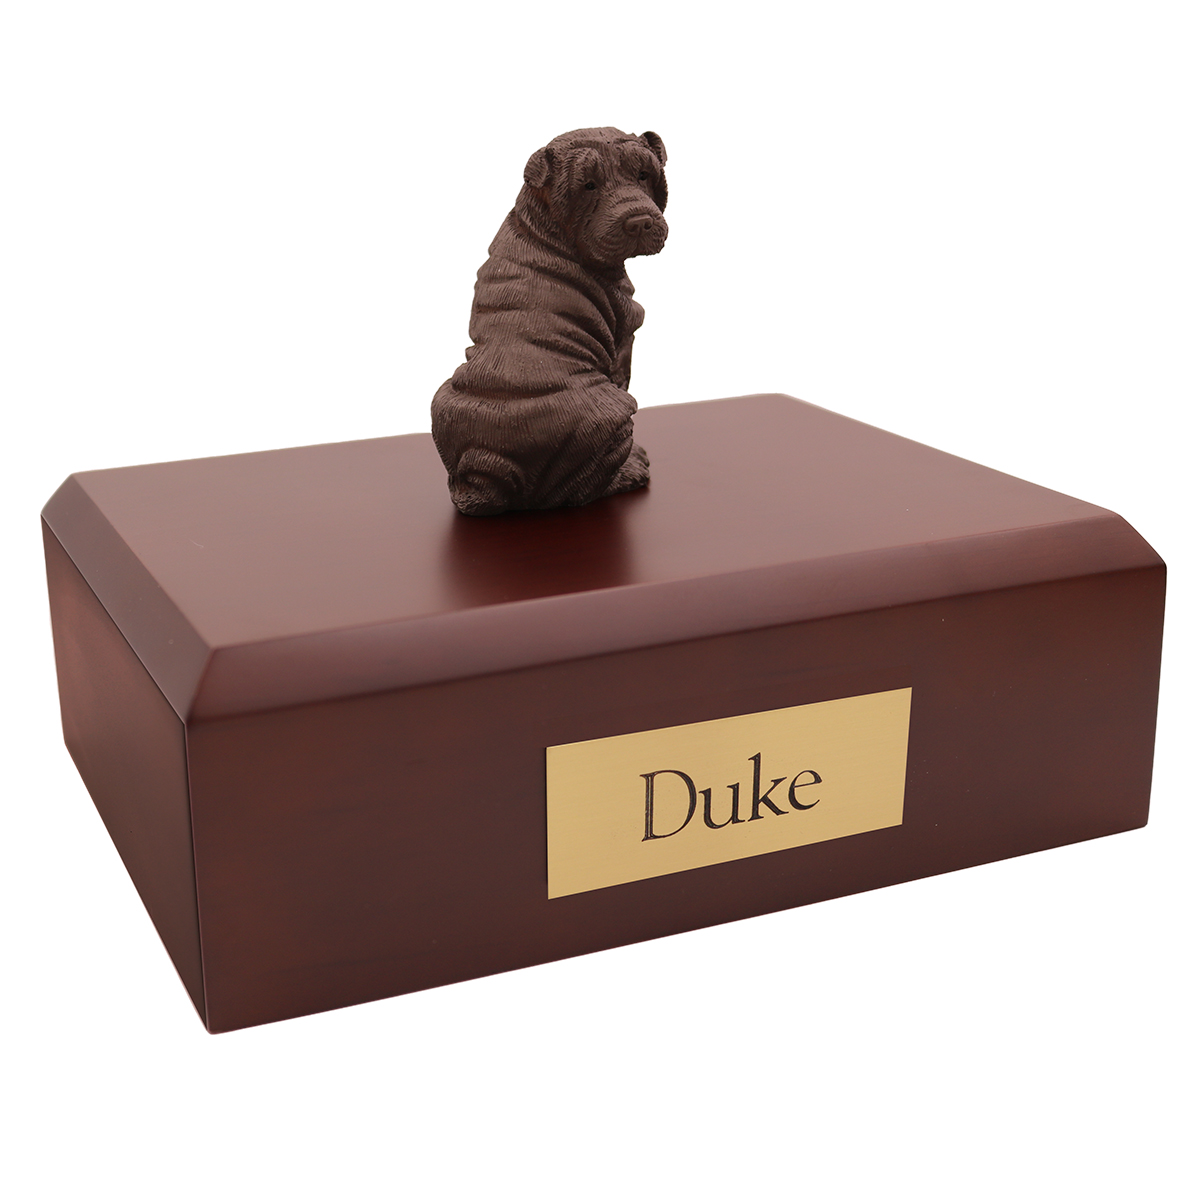 Dog, Shar Pei, Chocolate - Figurine Urn